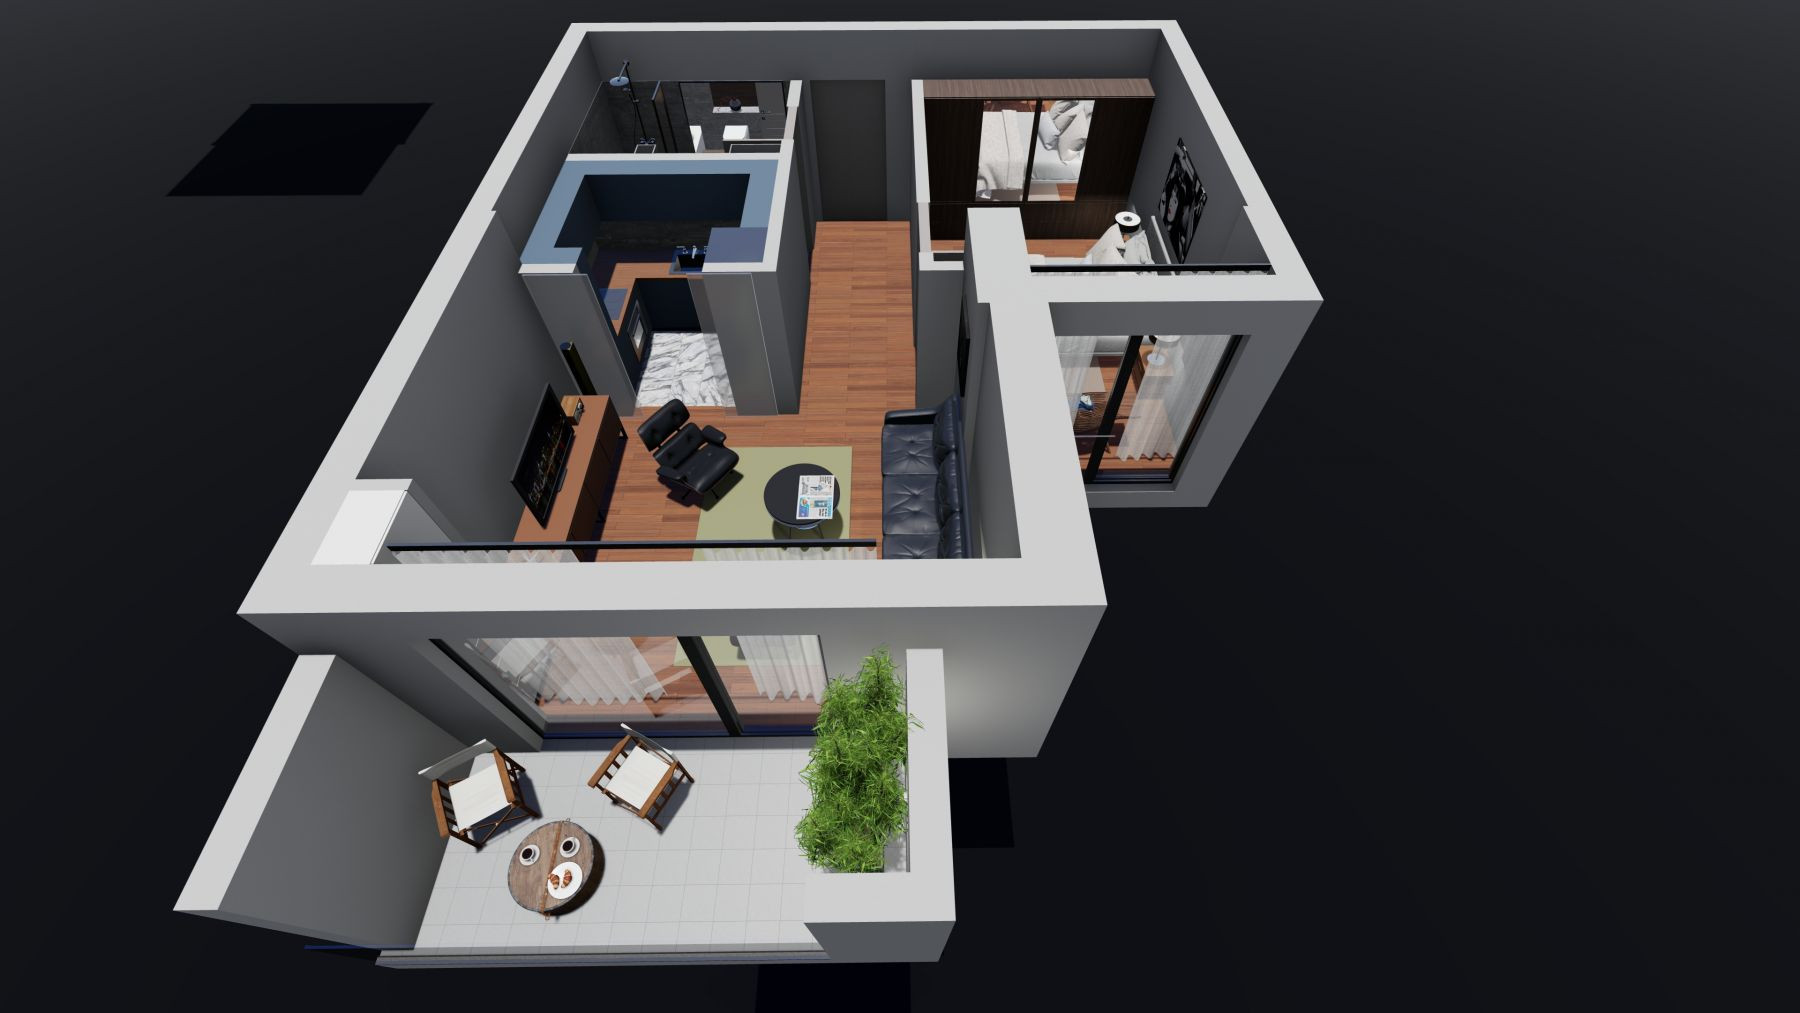 Apartamente - Str Justitiei 57 - Smart Home Compartimentari Inteligente  6